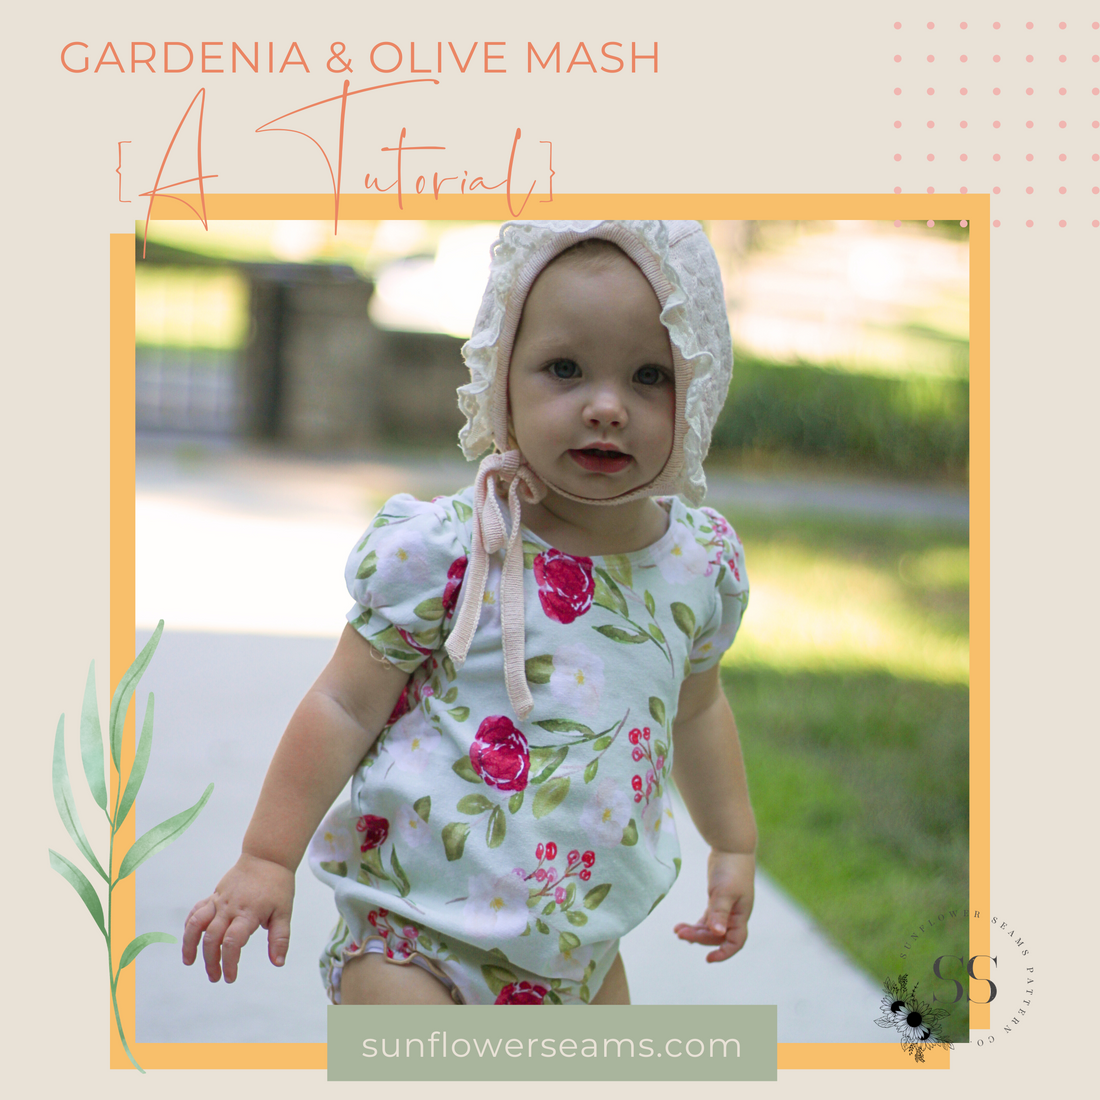 Gardenia & Olive Mash {A Tutorial}